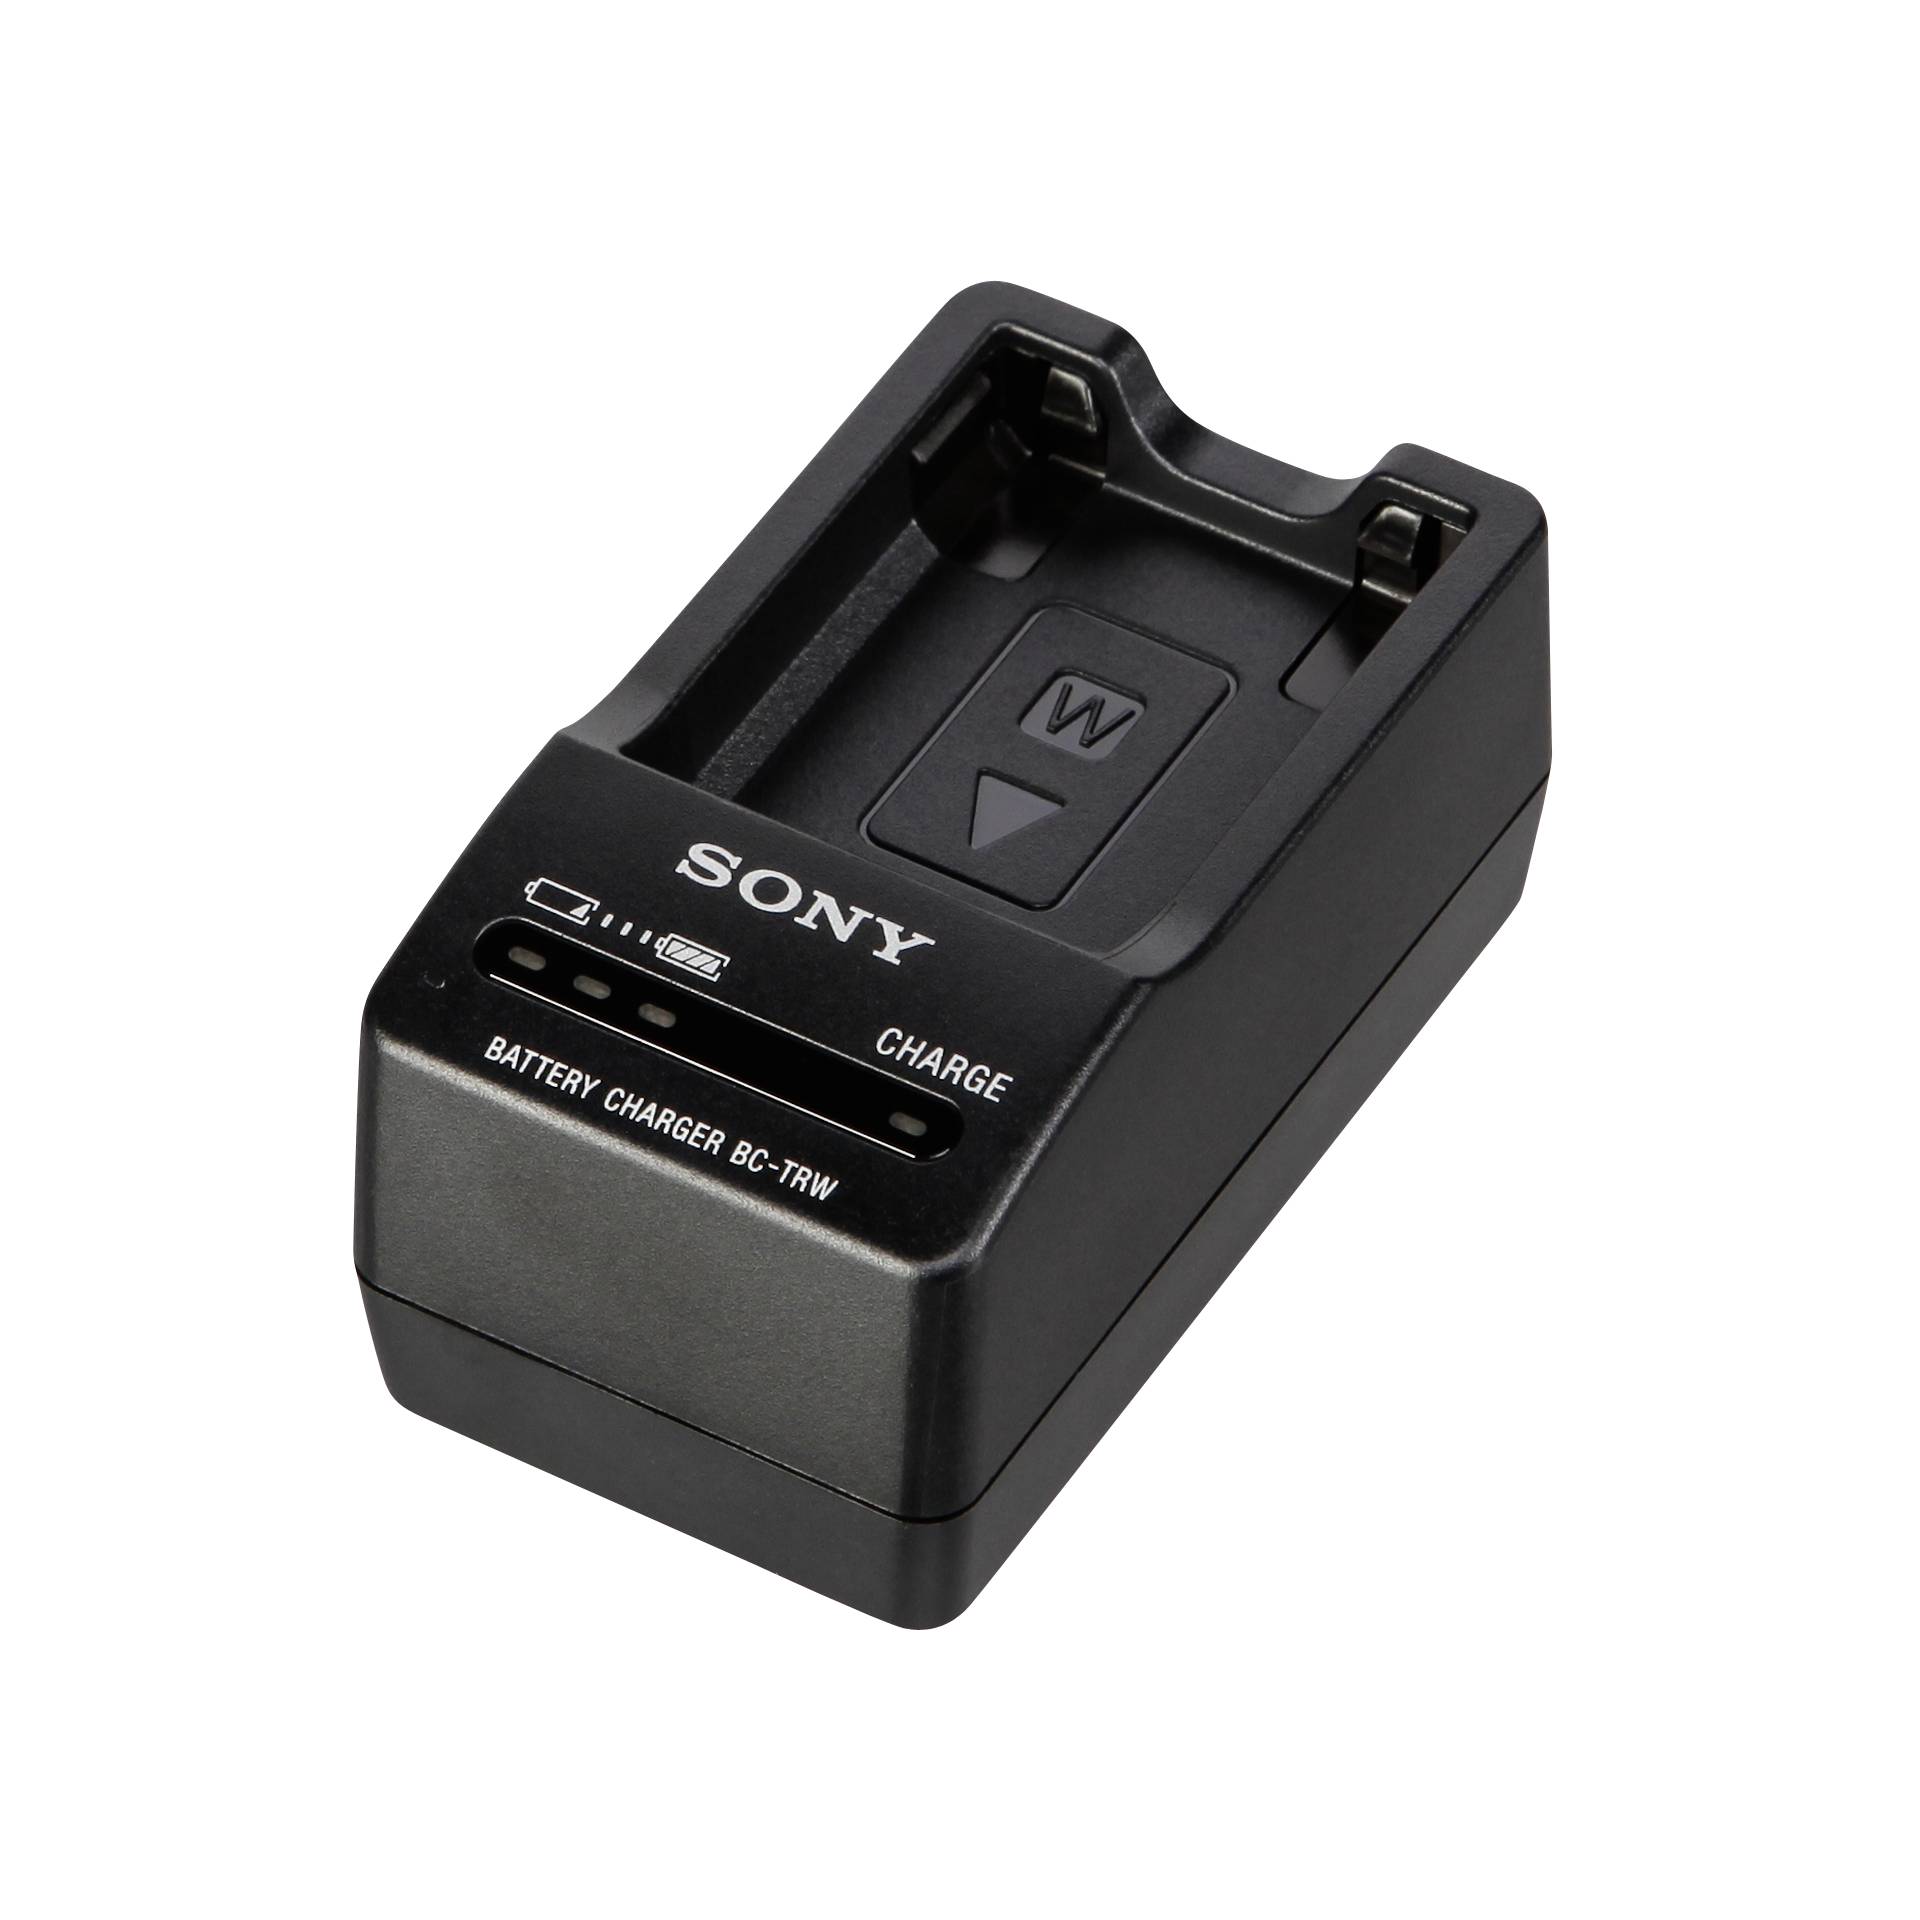 Sony BC-TRW caricabatteria